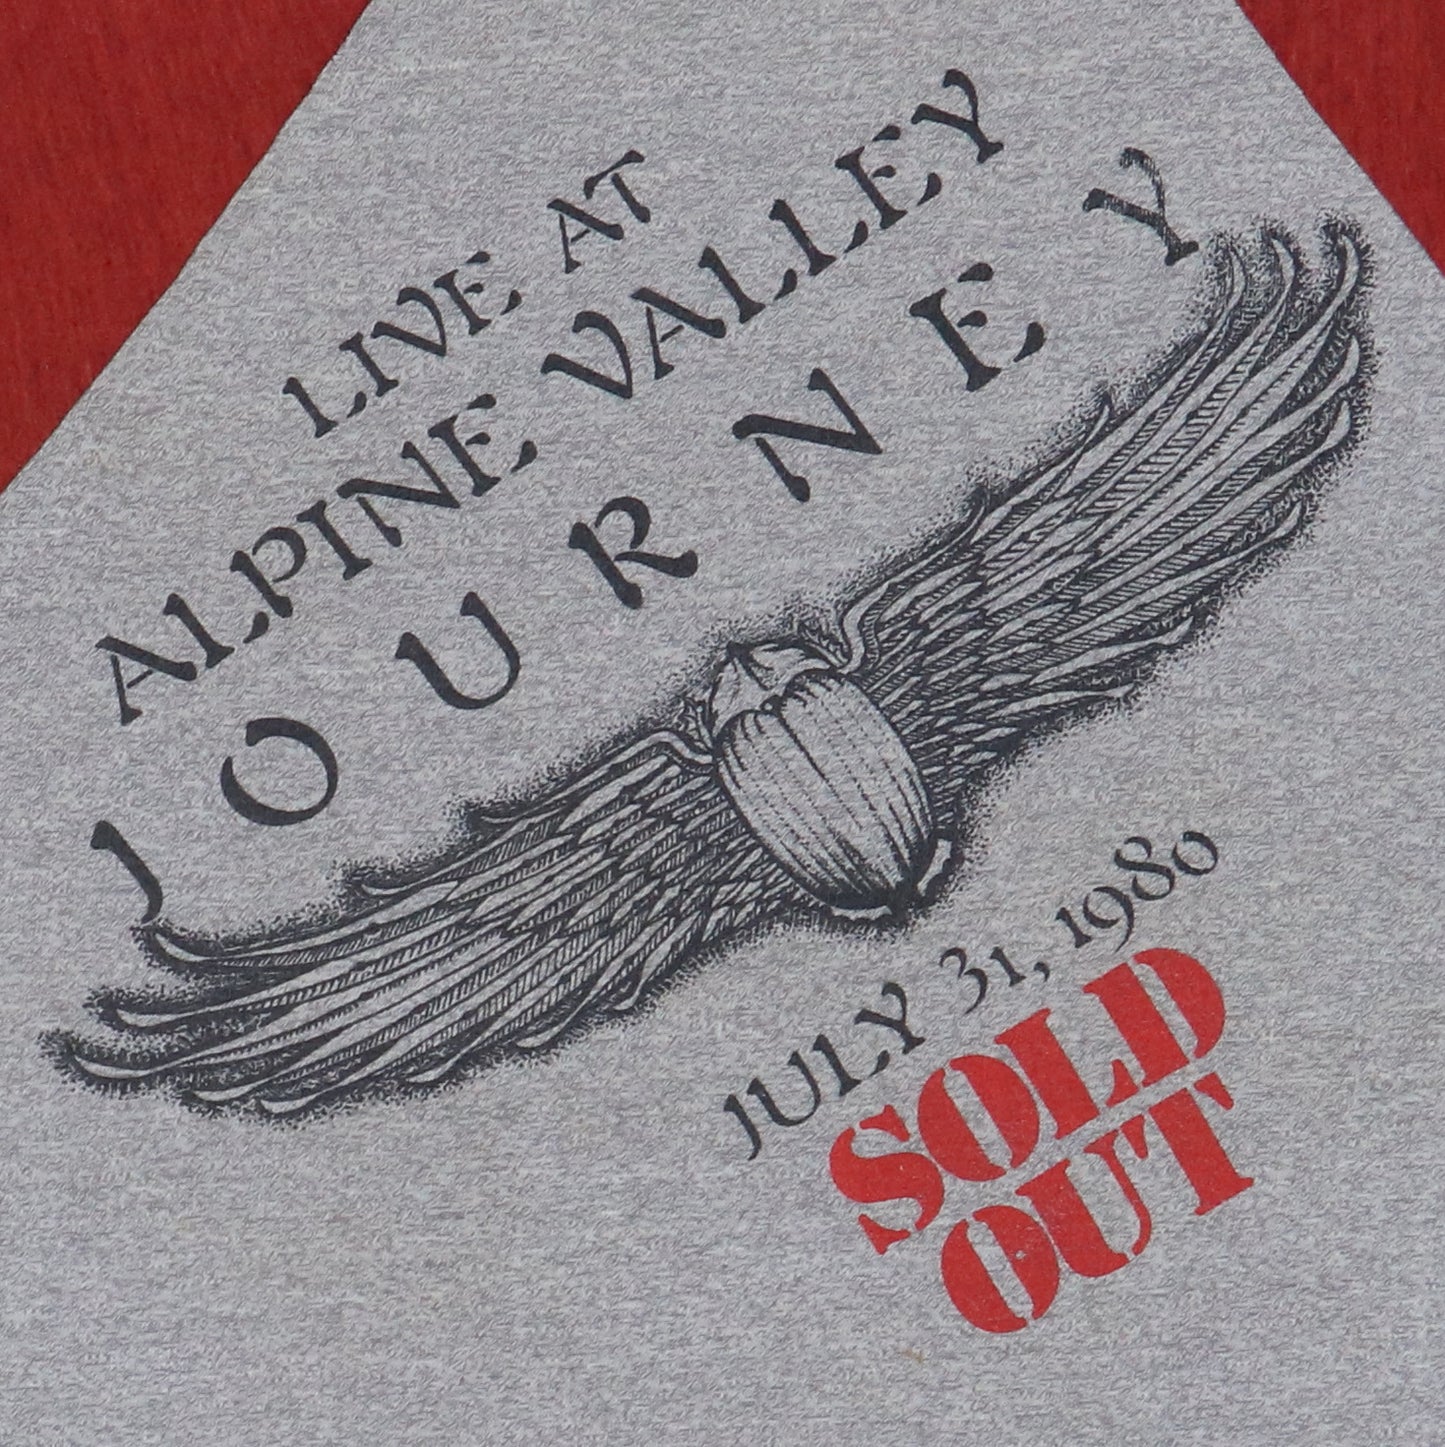 1980 Journey Alpine Valley Concert Jersey Shirt